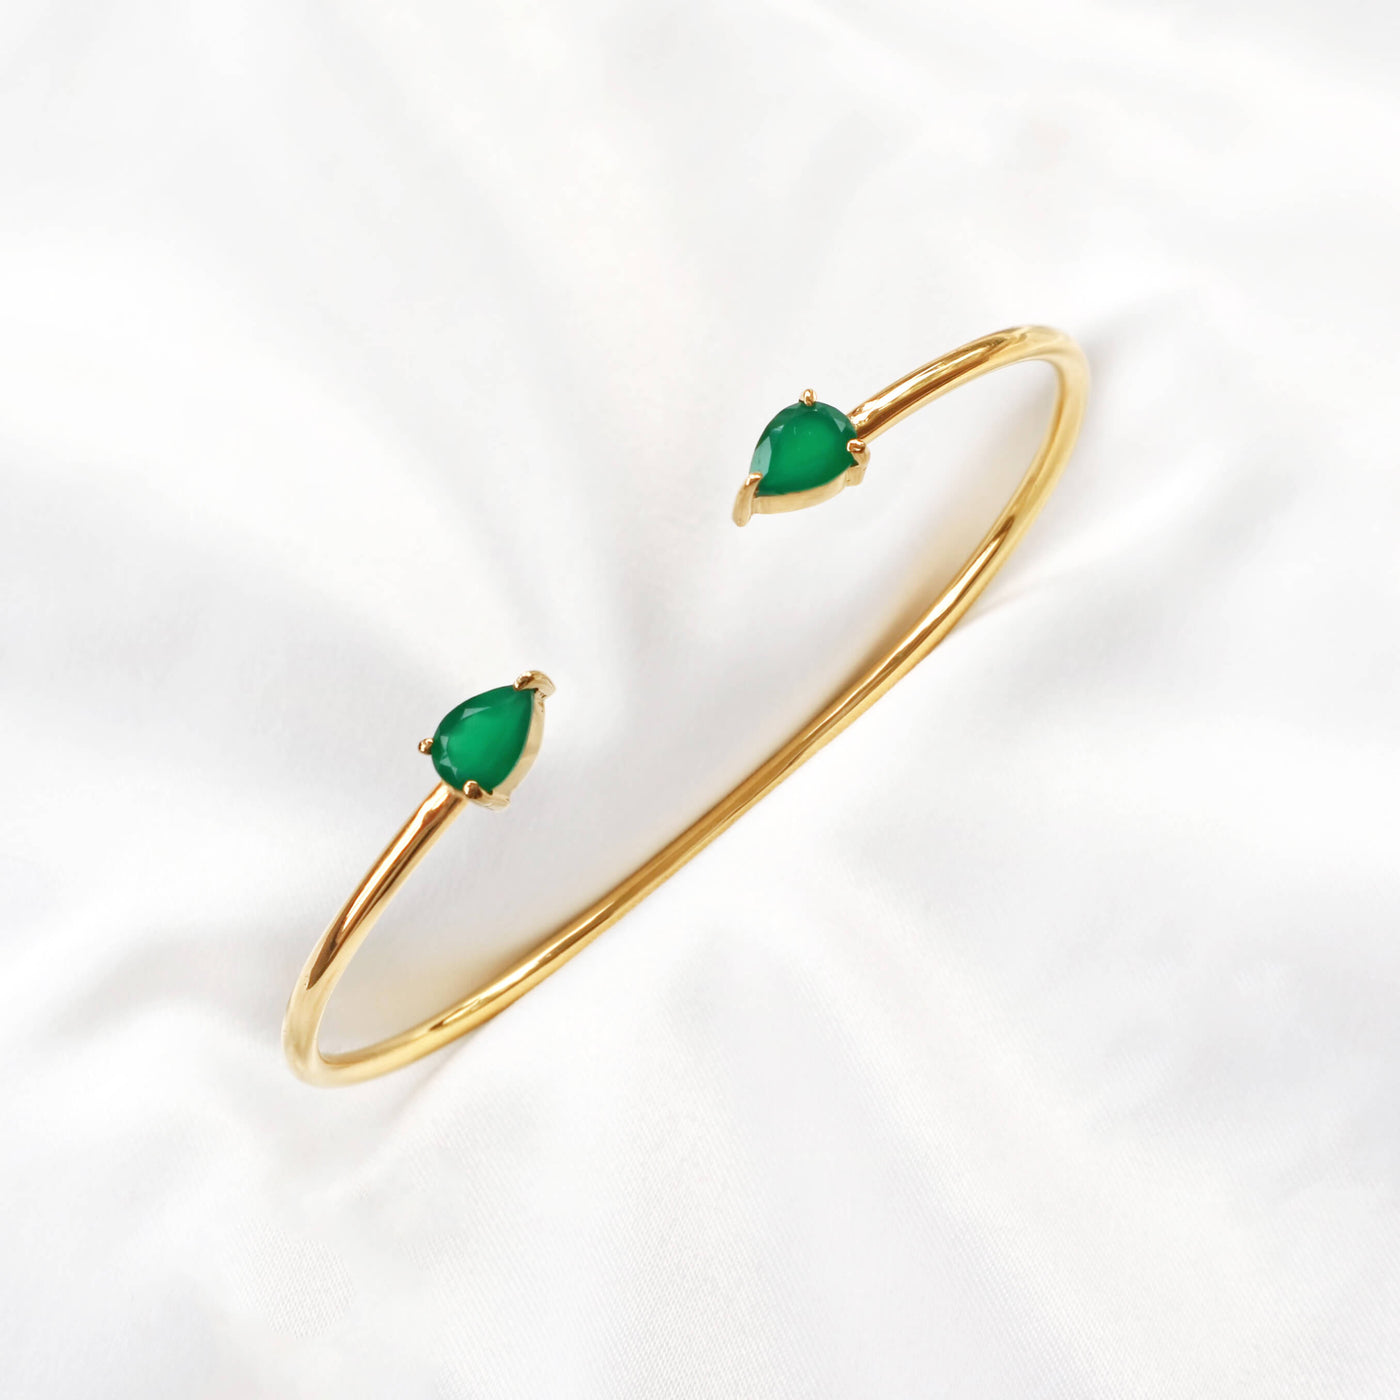 Green onyx gemstone cuff bangle bracelet, Rani & Co. jewellery